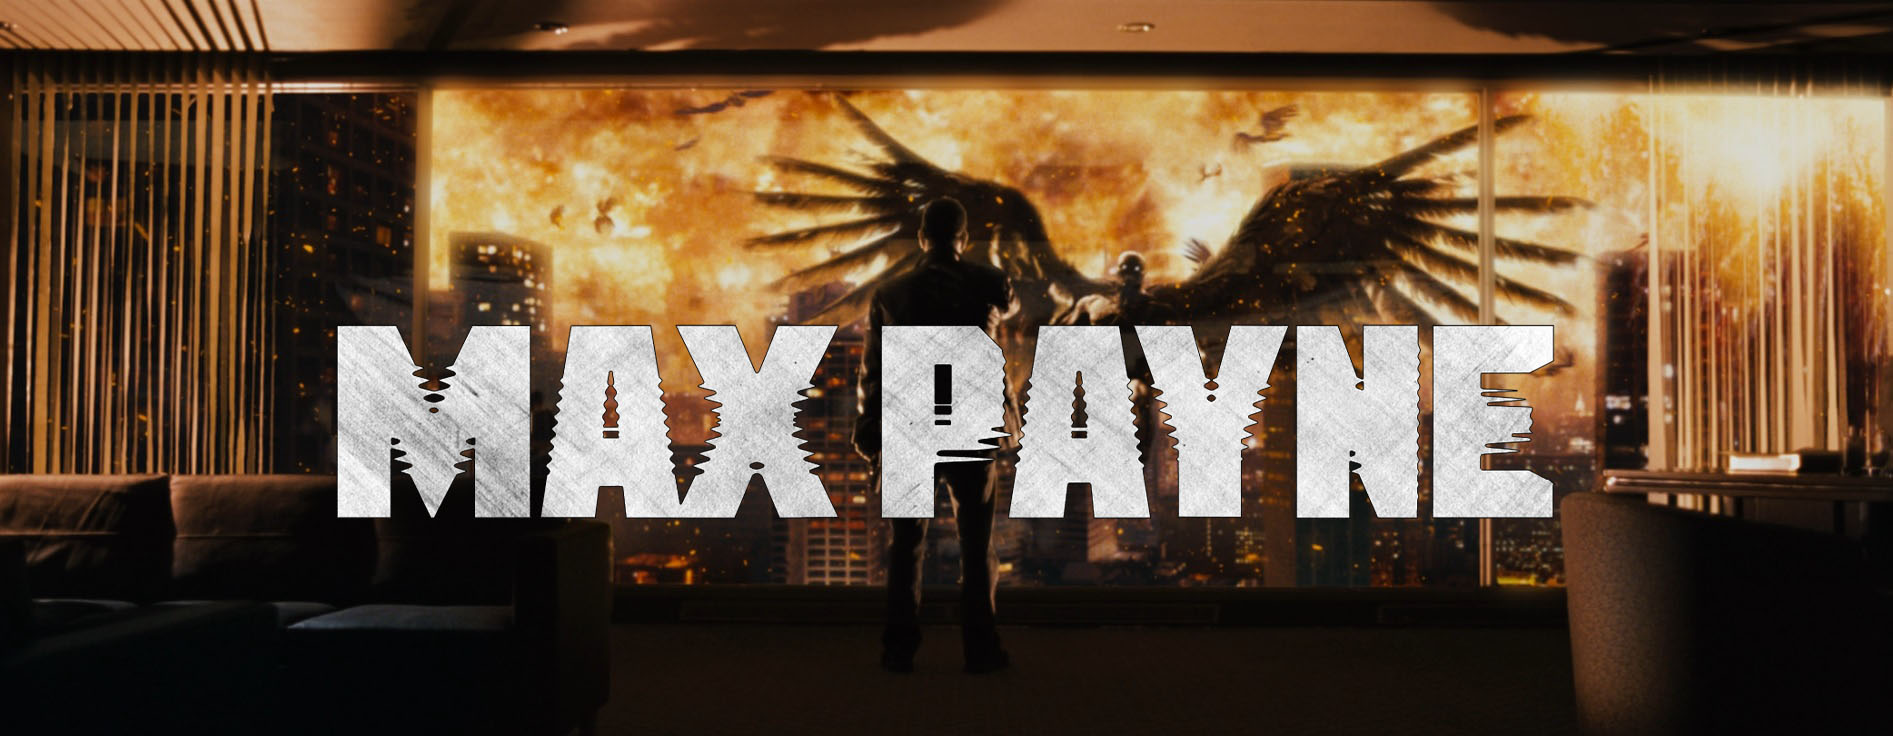 max payne movie banner